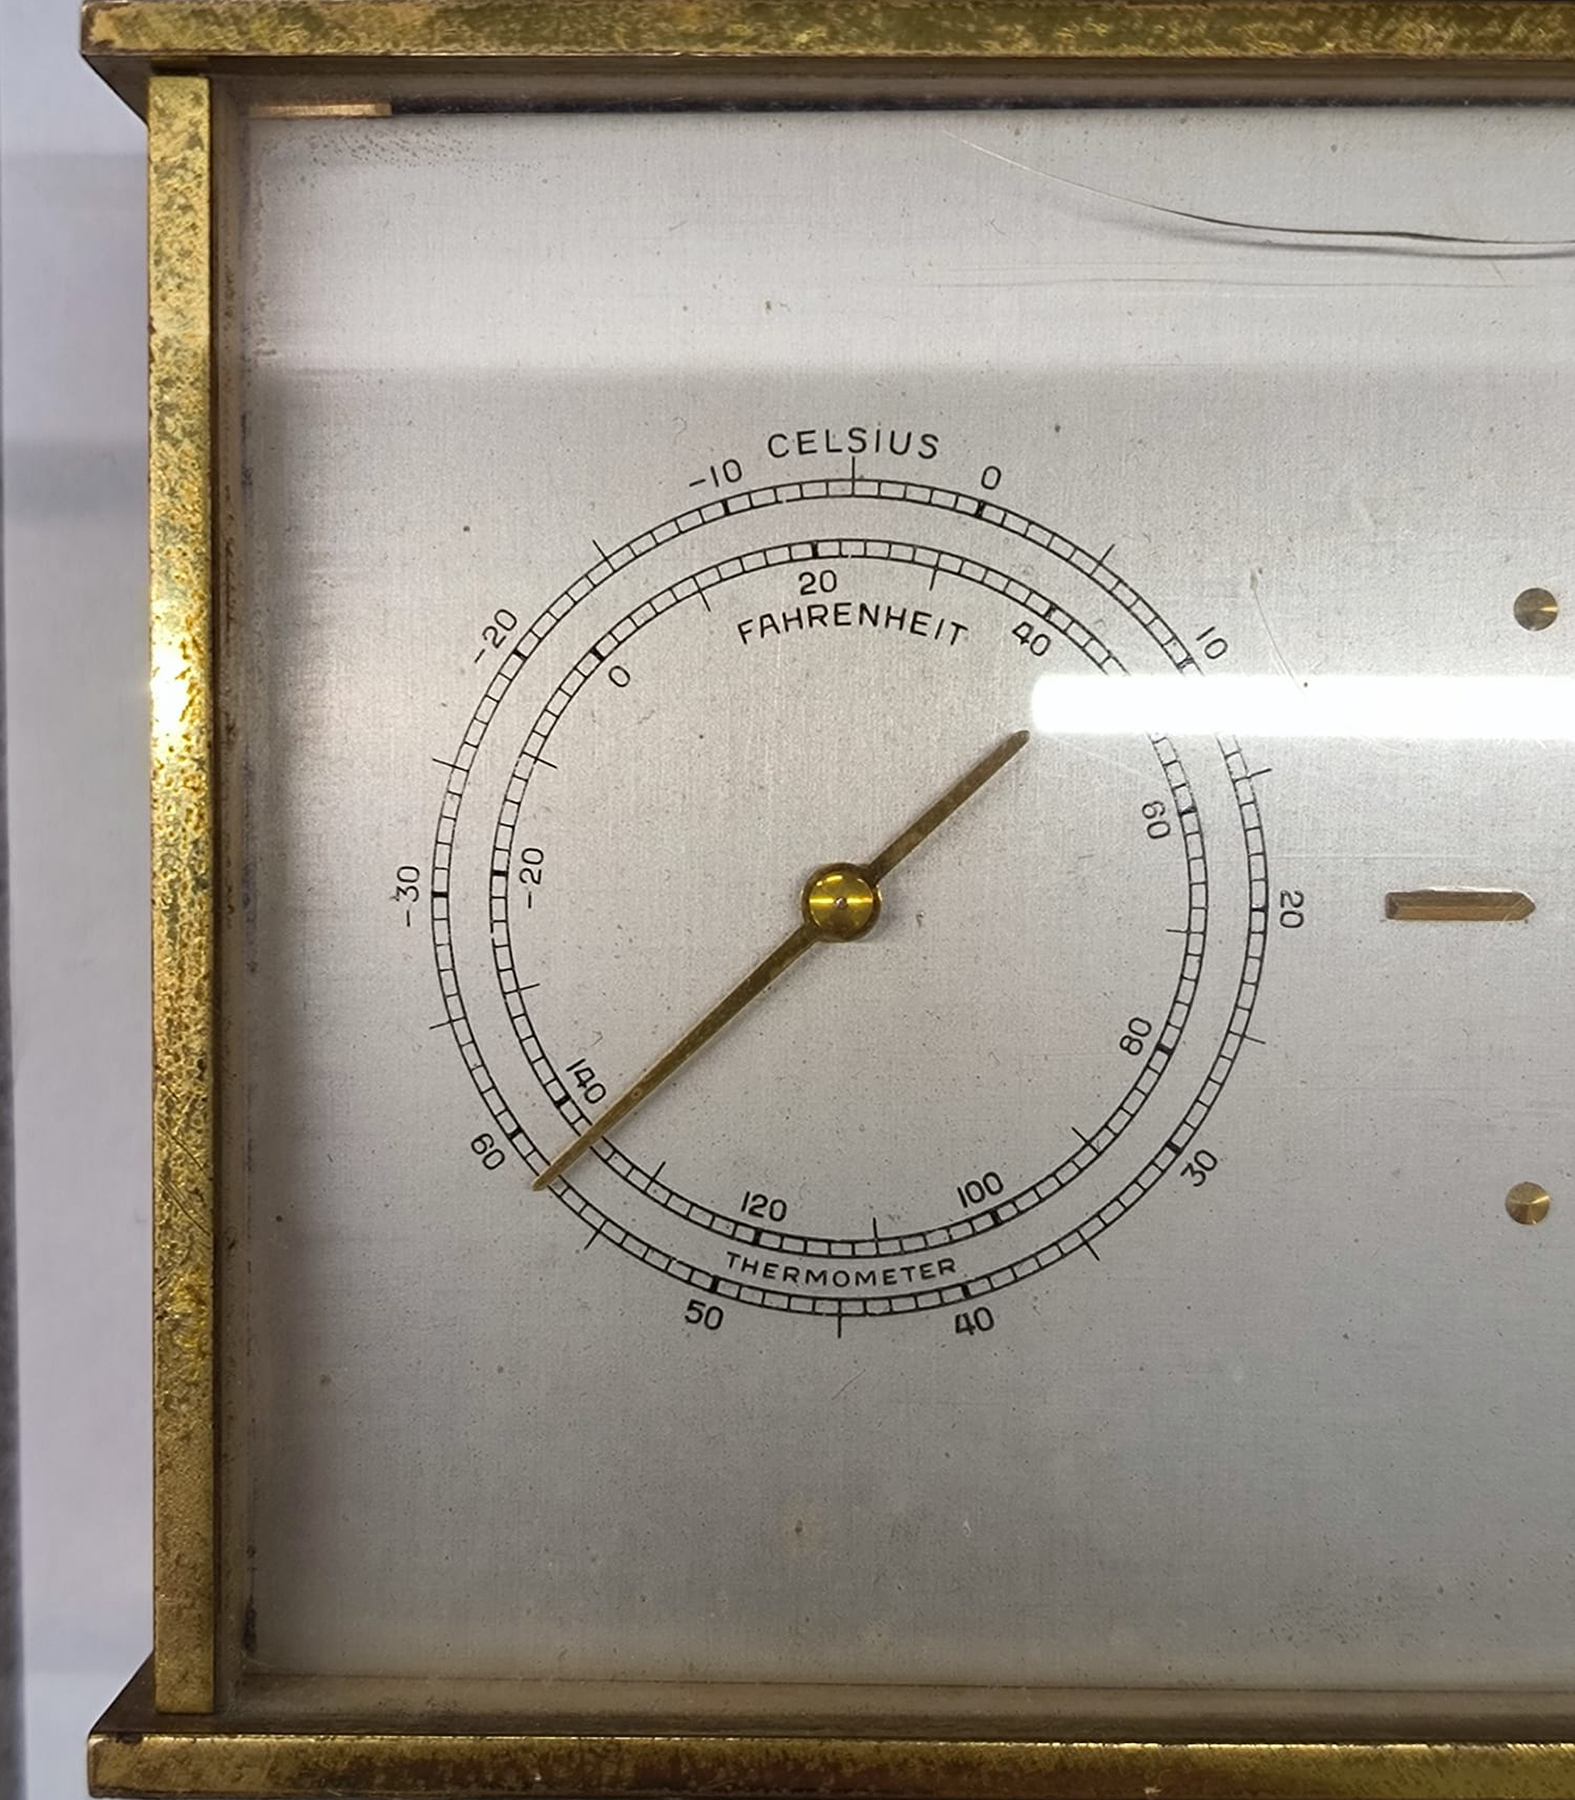 Breguet desktop hygrometer, in bronze and glass, Swiss machinery - Image 4 of 5